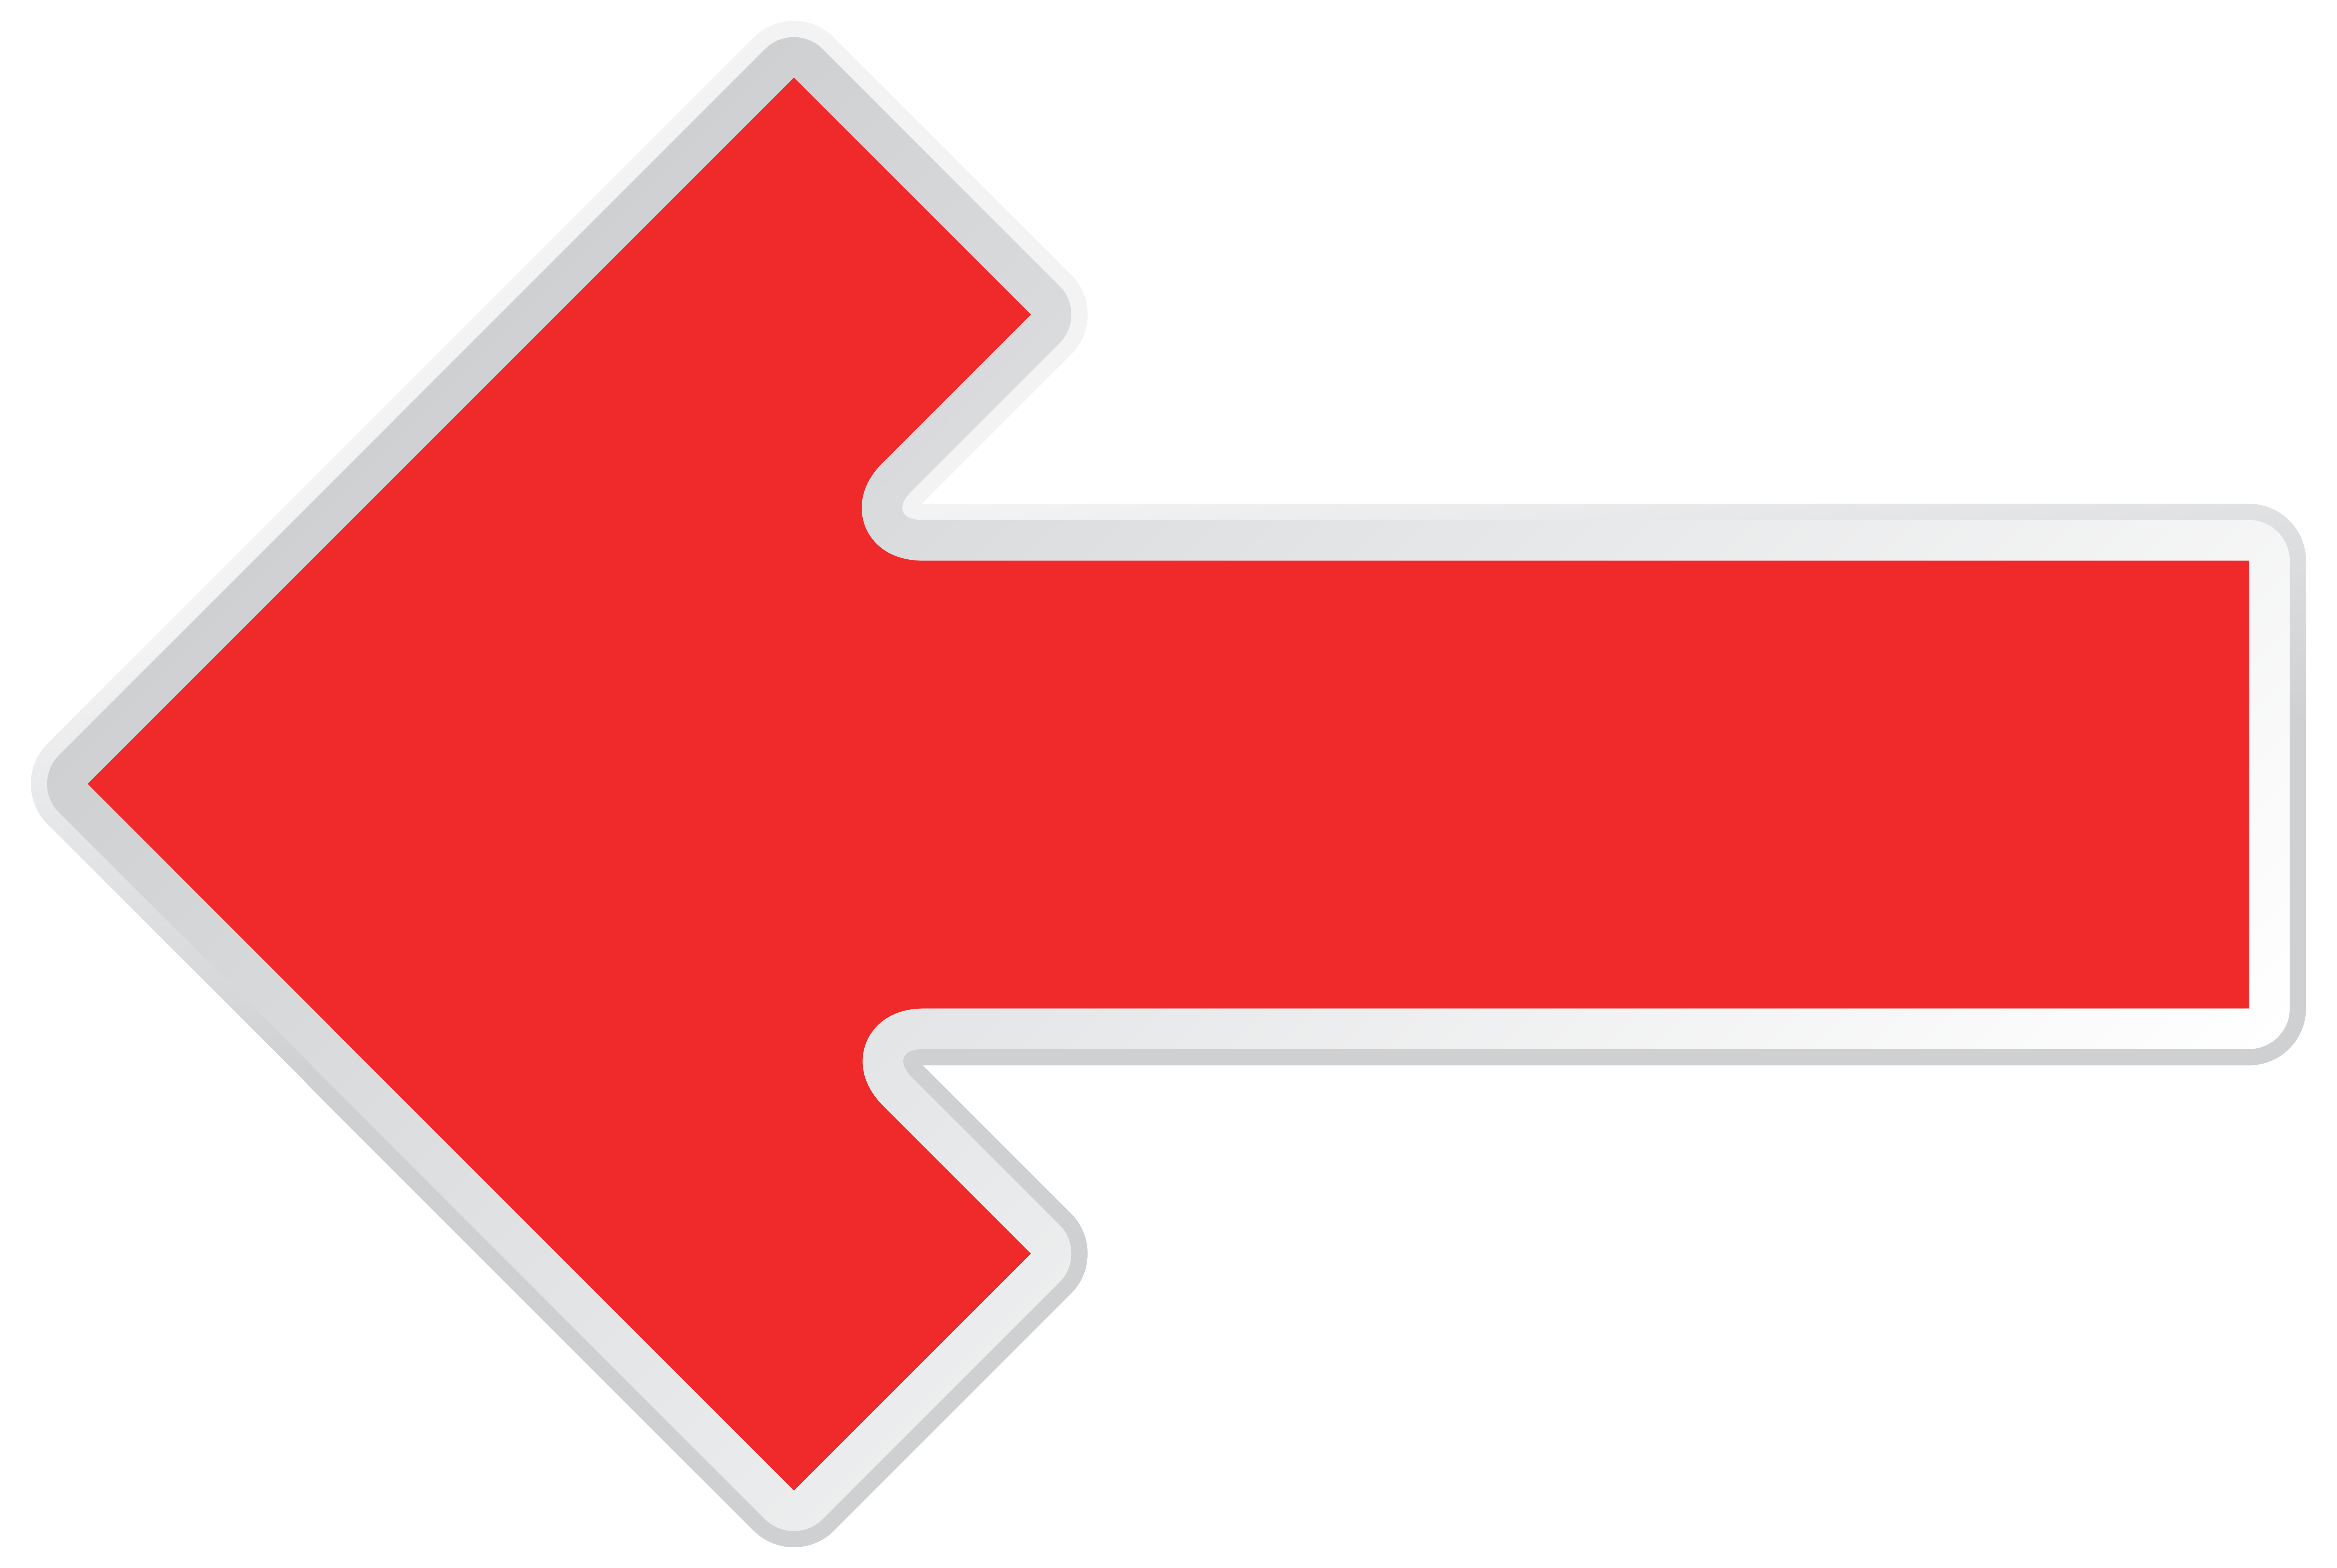 Red Left Arrow PNG Transparent Image